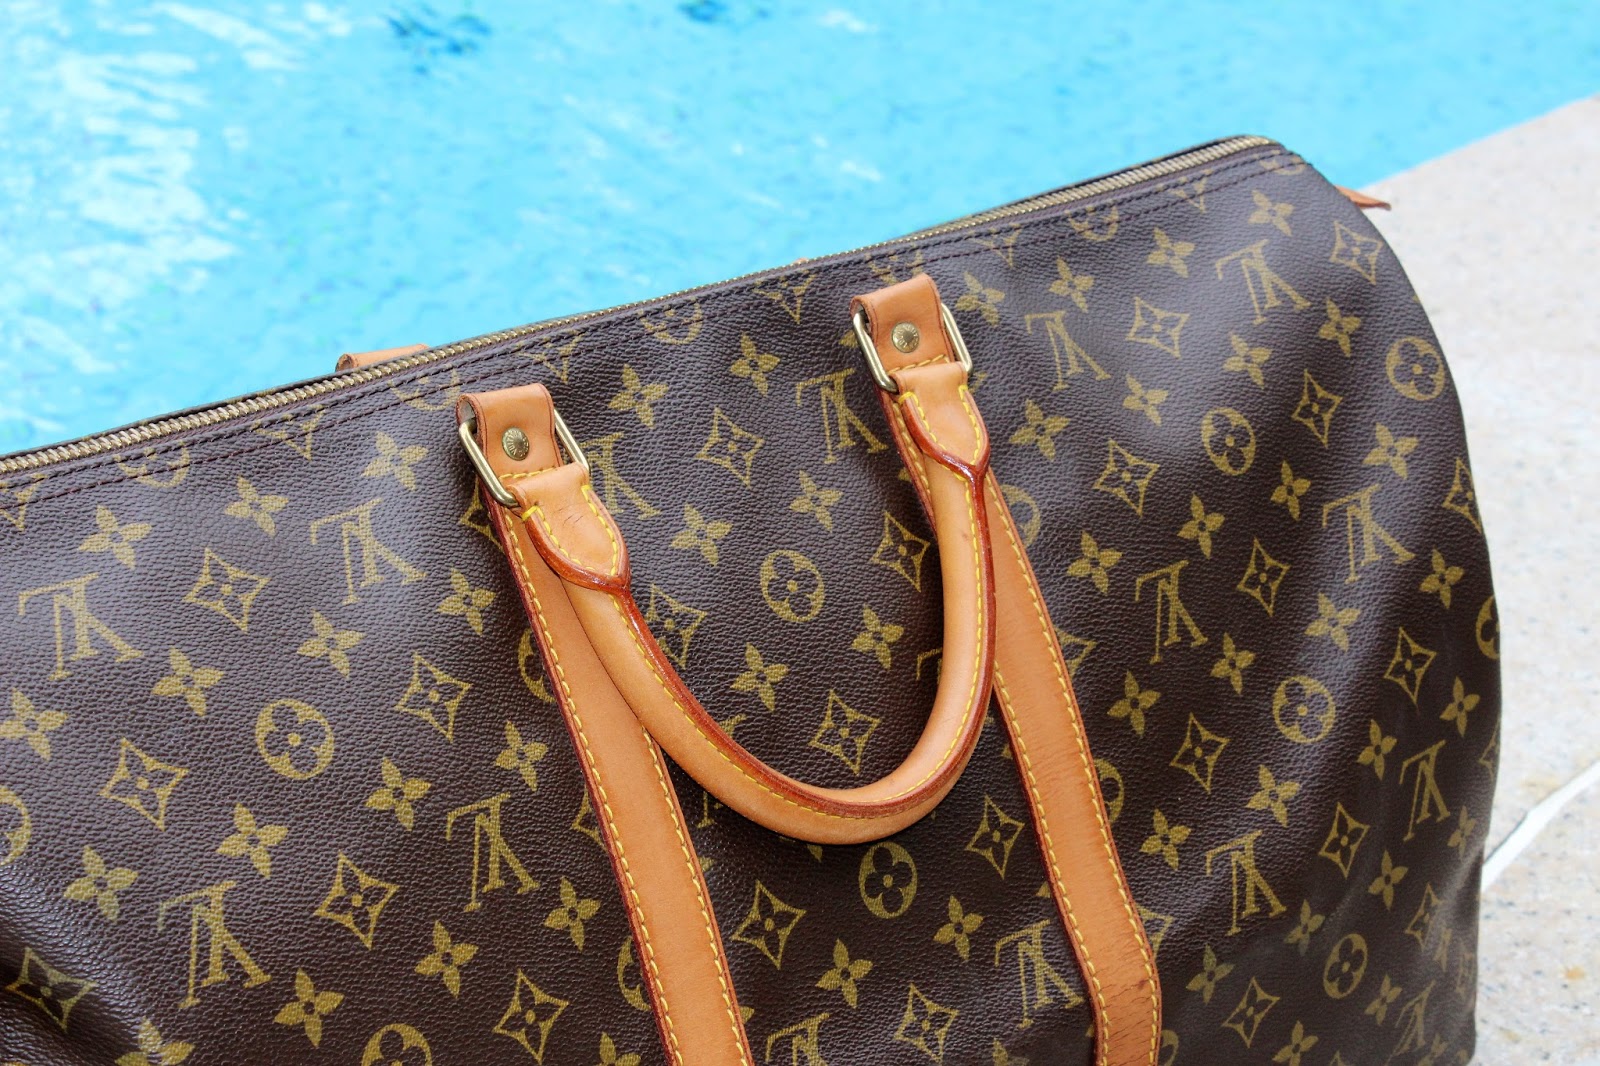 Louis Vuitton Keepall 50 Bag Review 